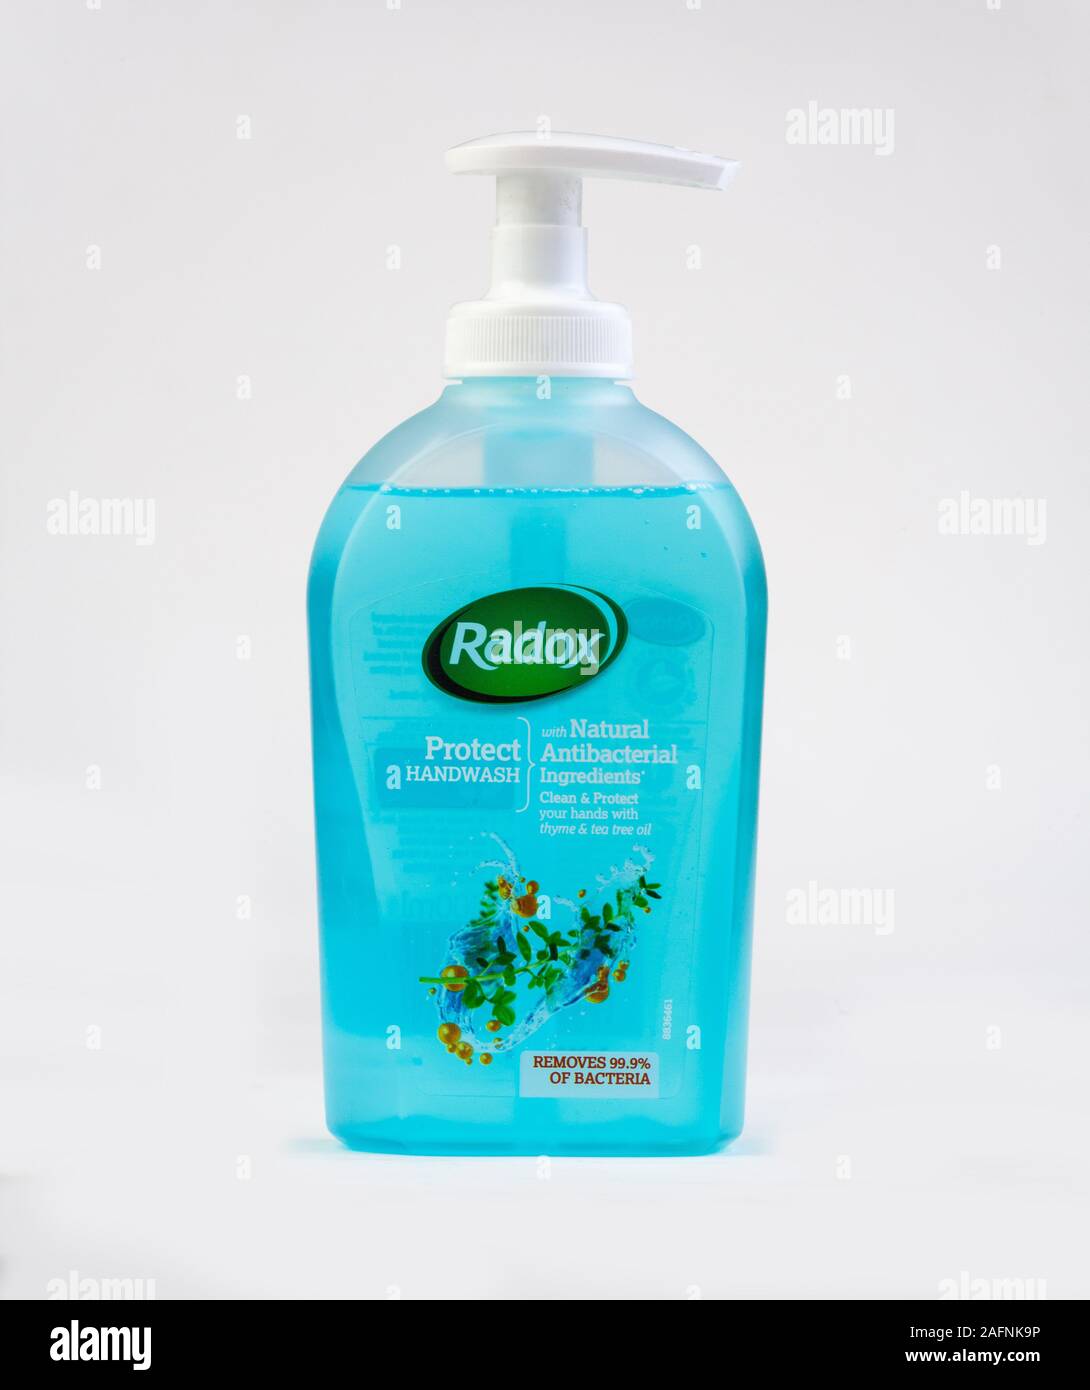 Radox antibacterial handwash Stock Photo